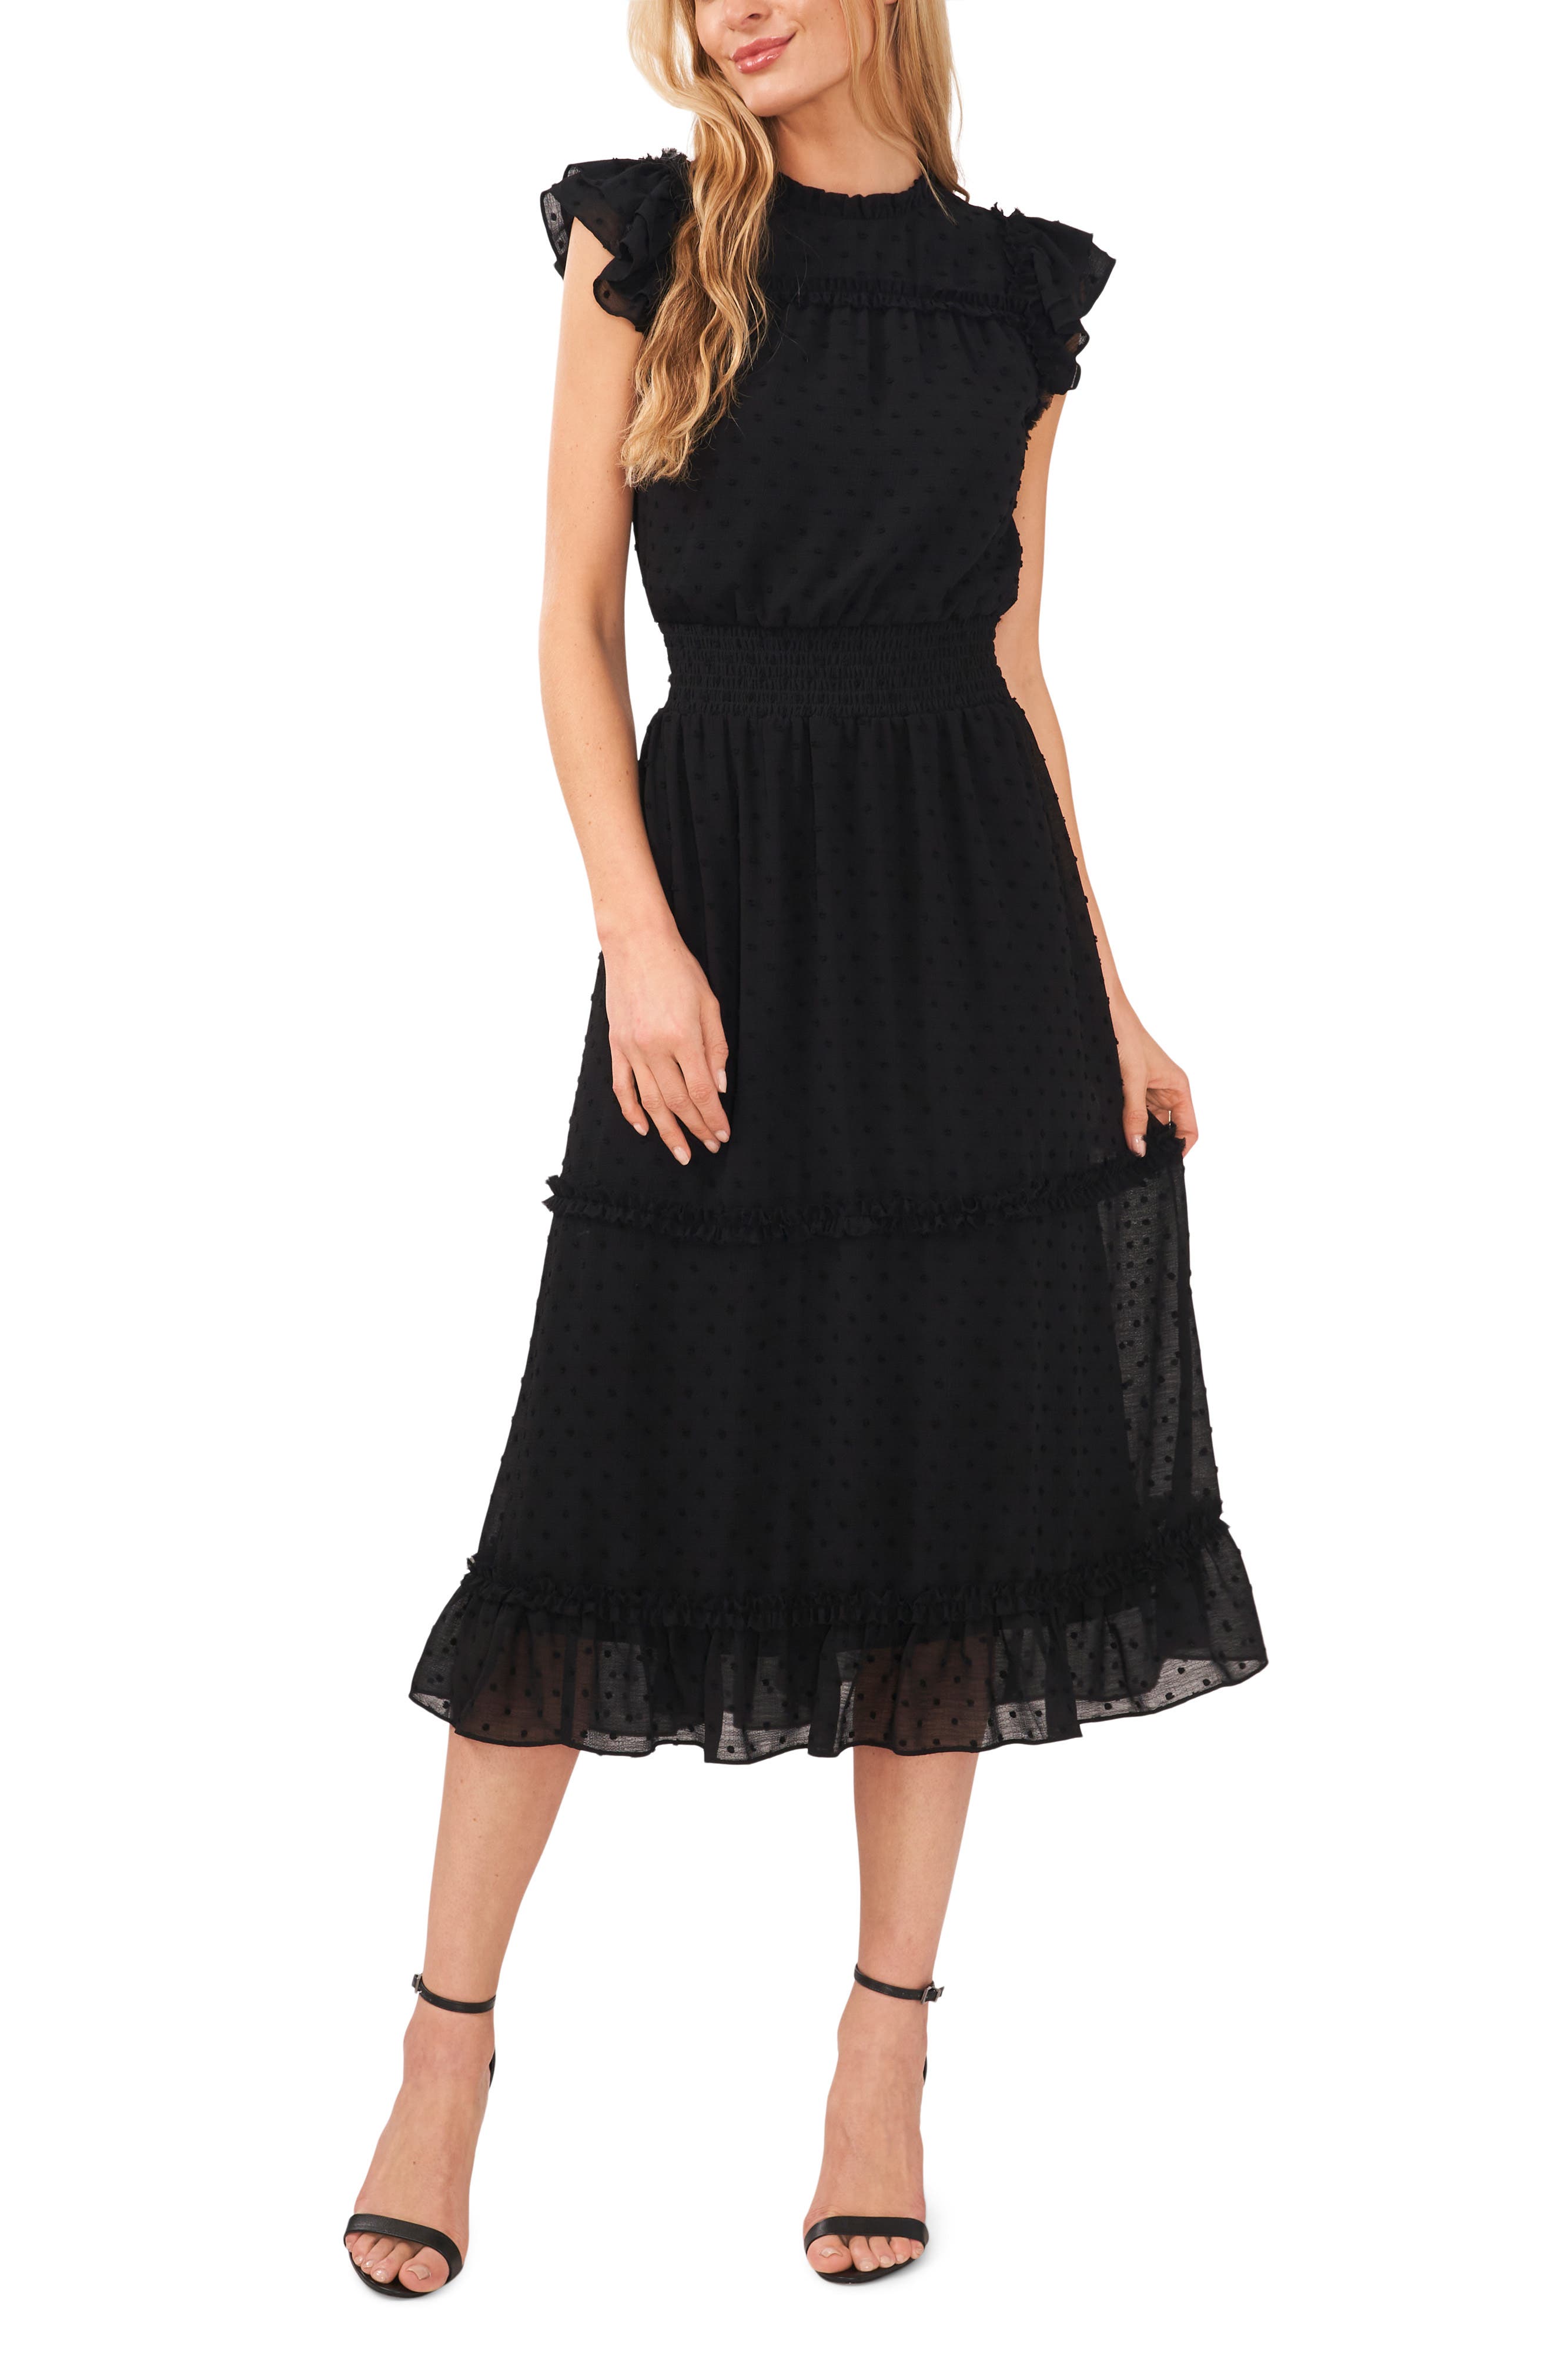 black formal midi dress